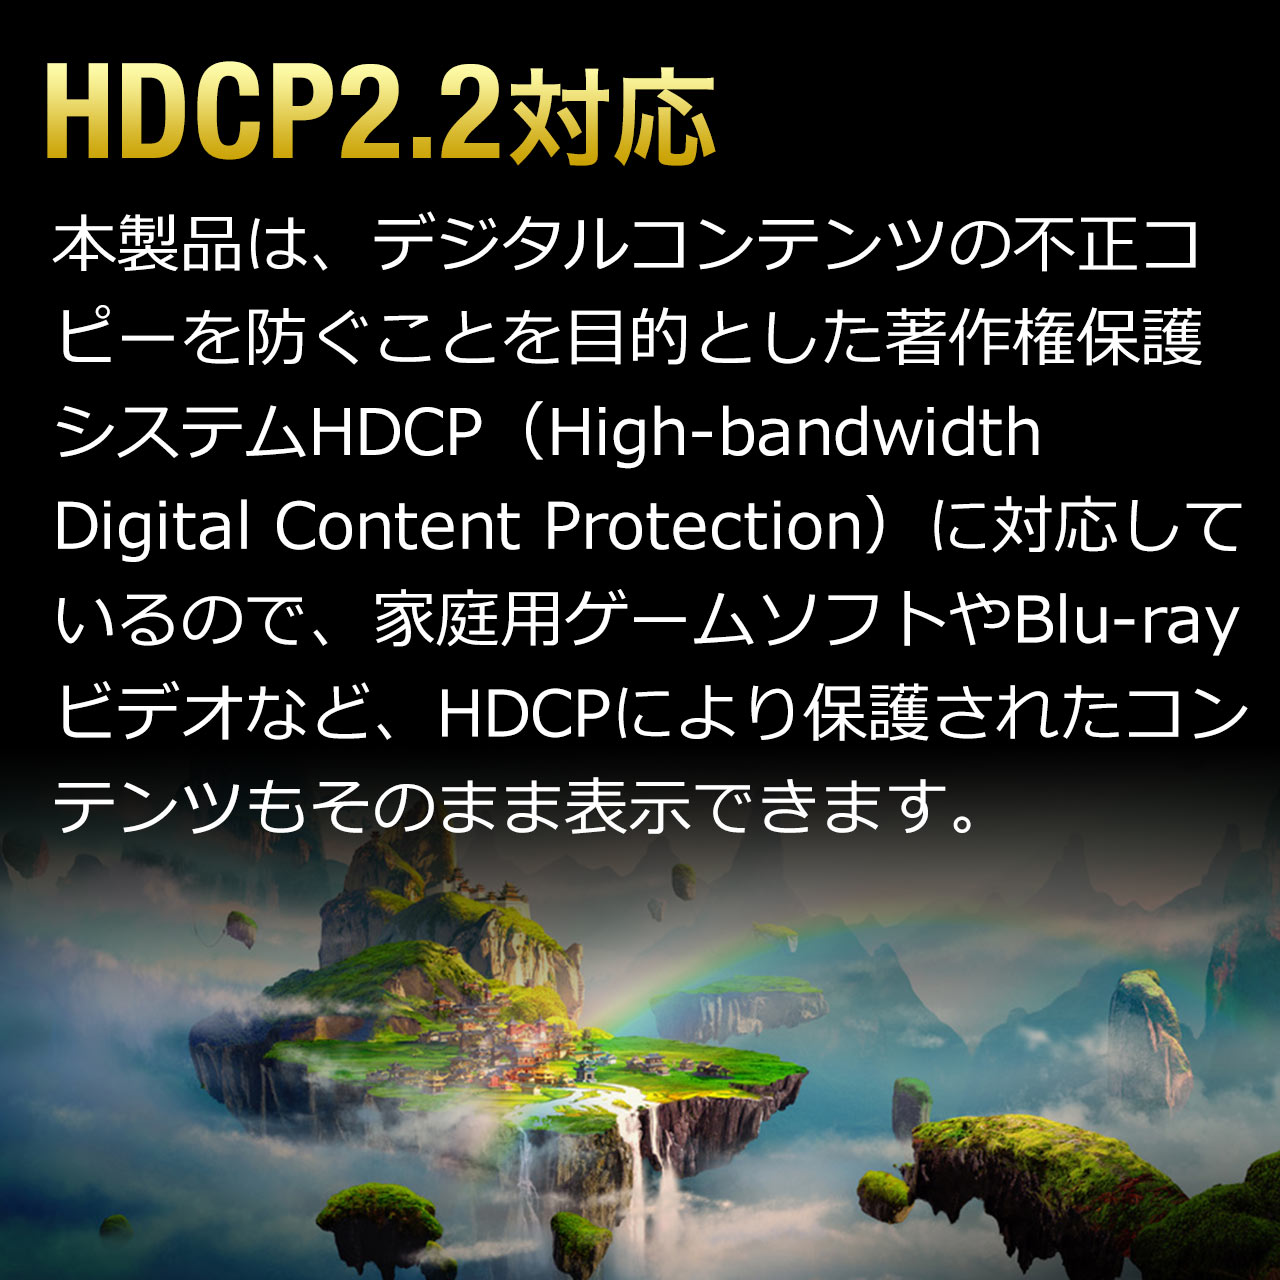 HDMI切替器 4入力1出力 4K/60Hz HDR対応 3.5mm音声出力端子つき HDMIセレクター PS5対応 400-SW029